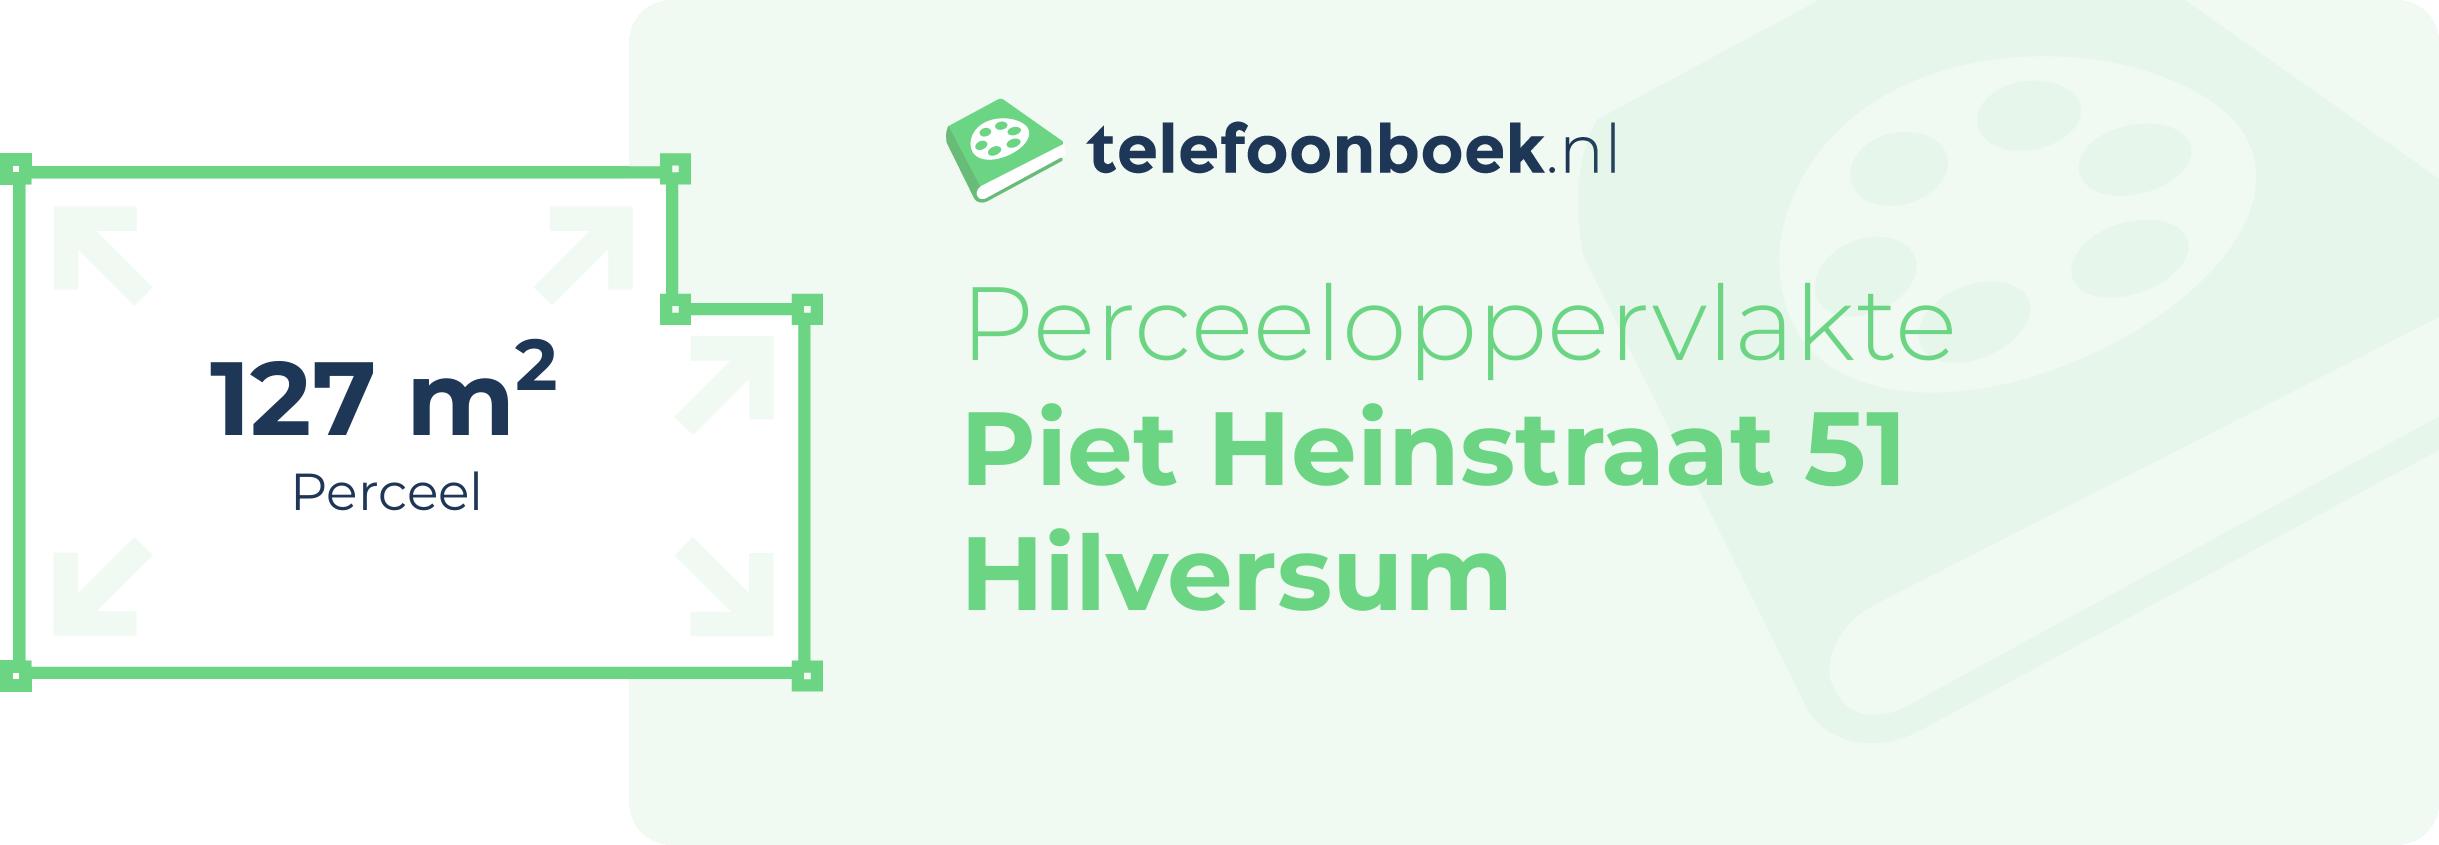 Perceeloppervlakte Piet Heinstraat 51 Hilversum